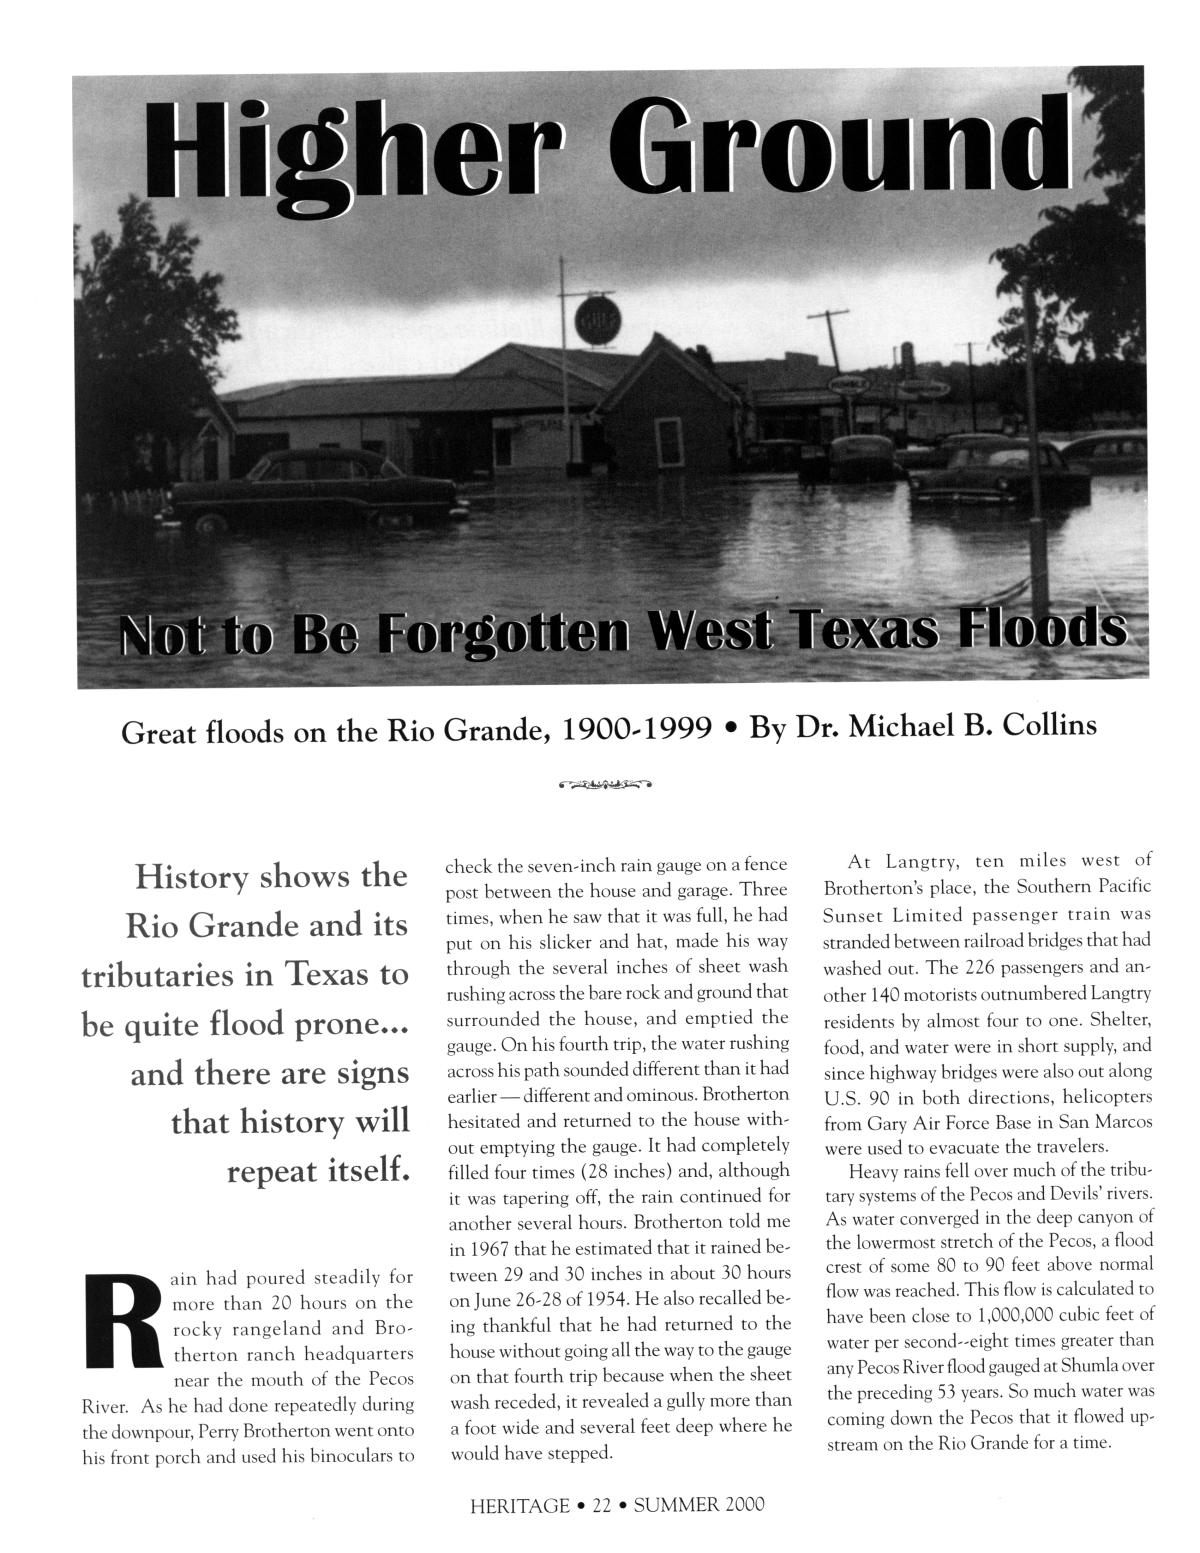 Texas Heritage, Volume 18, Number 3, Summer 2000
                                                
                                                    22
                                                